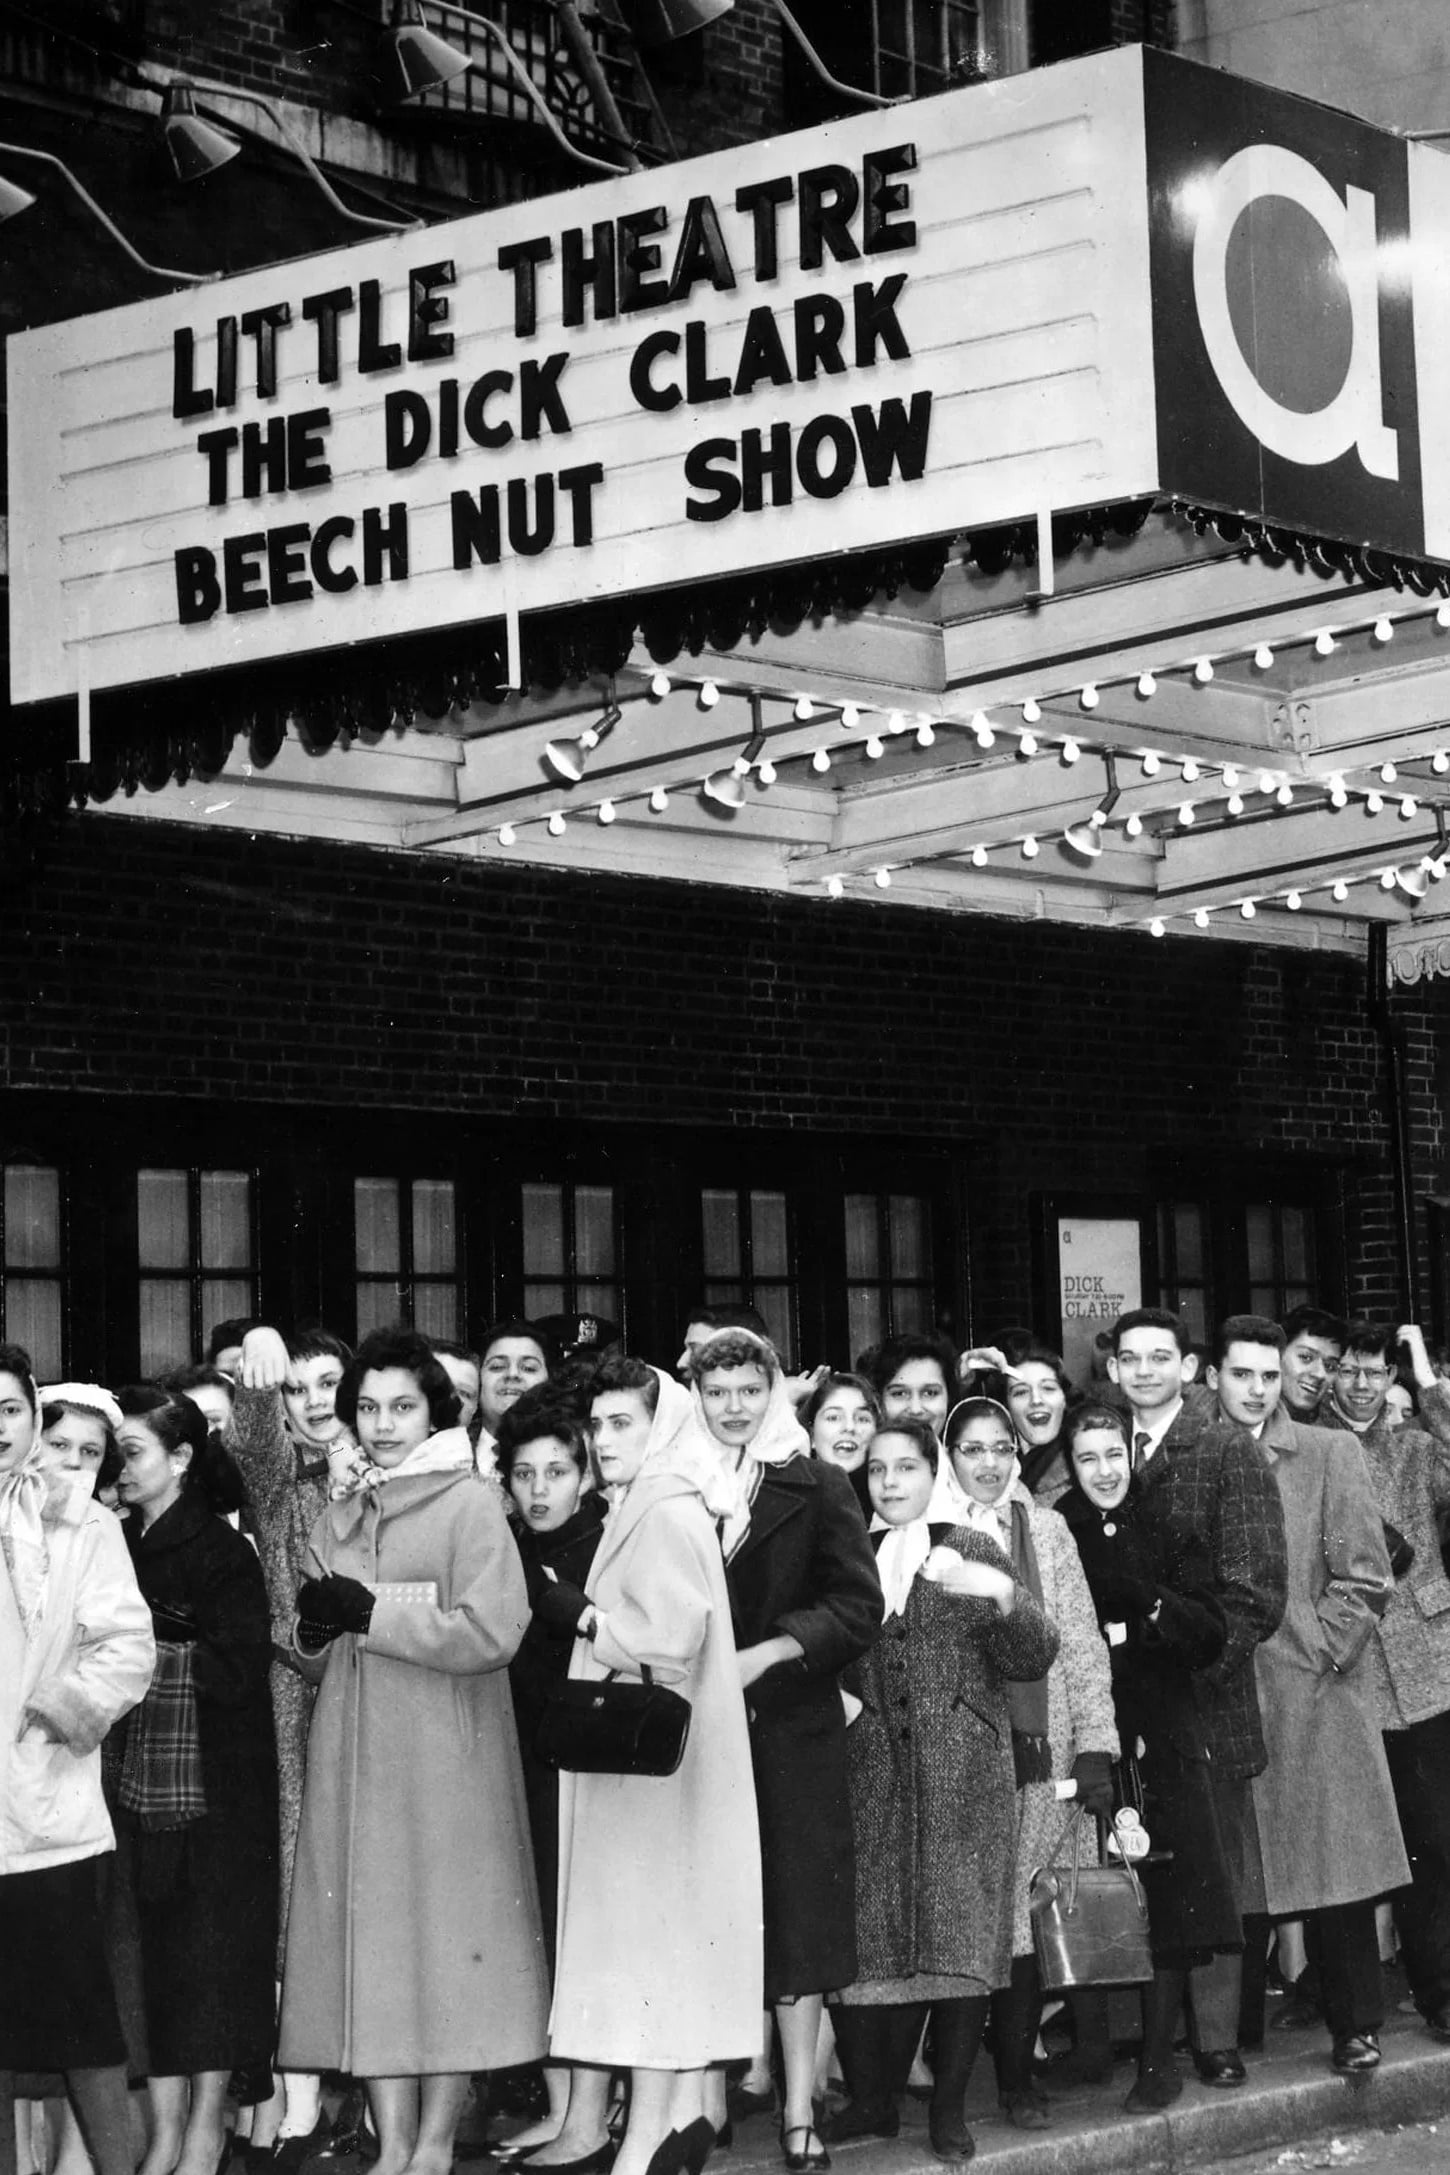 The Dick Clark Show (1958)